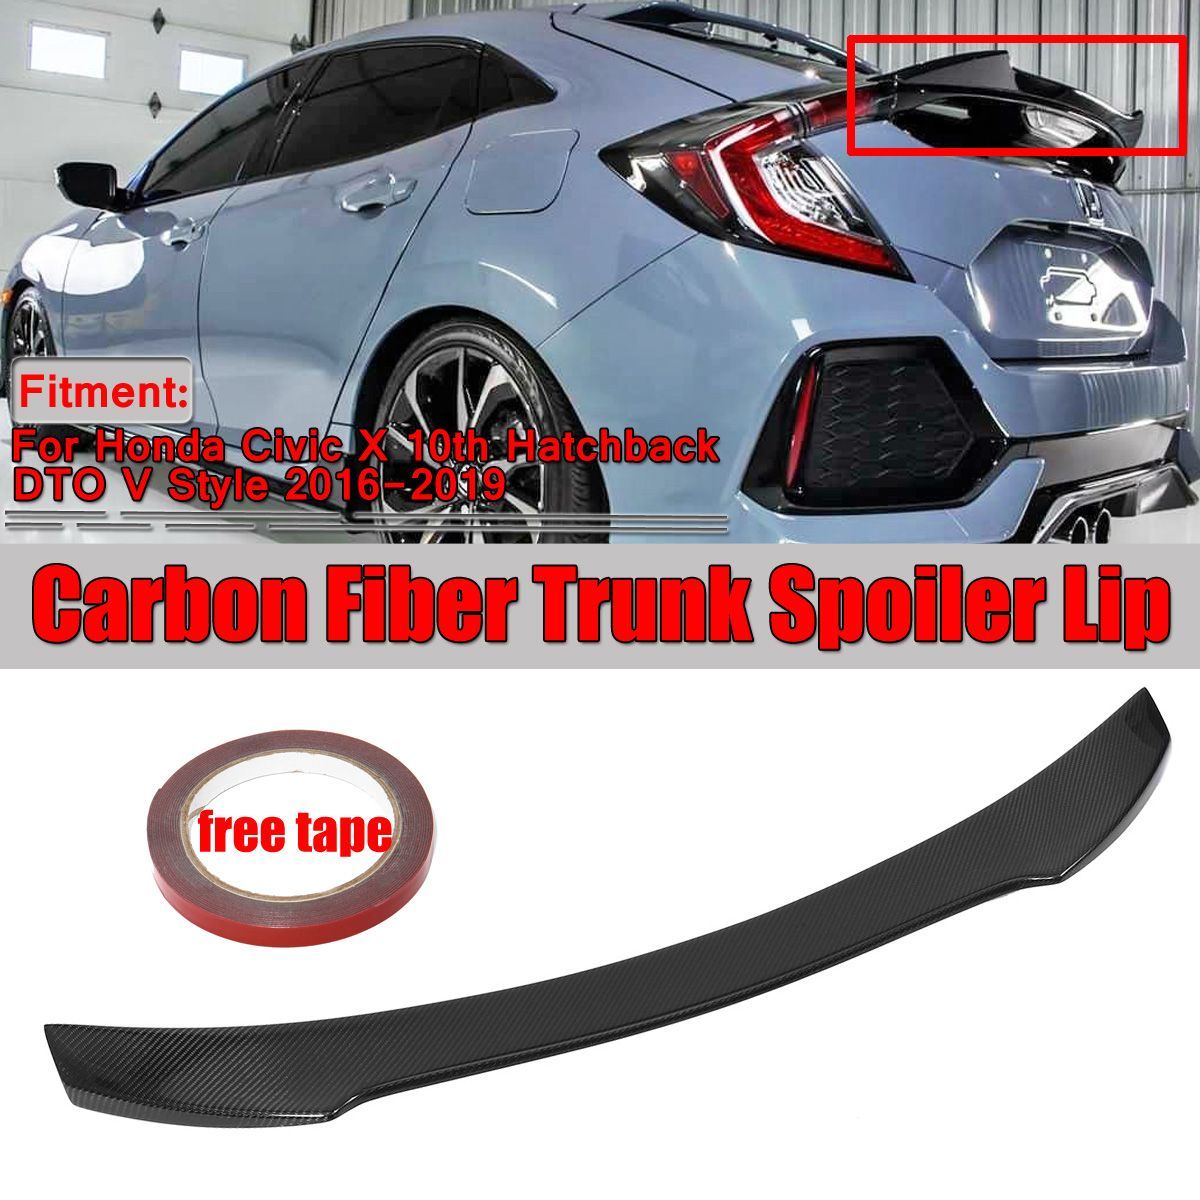 Carbon-Fiber-Trunk-Spoiler-Lip-For-Honda-Civic-X-10th-Hatchback-DTO-V-Style-2016-2019-1677142